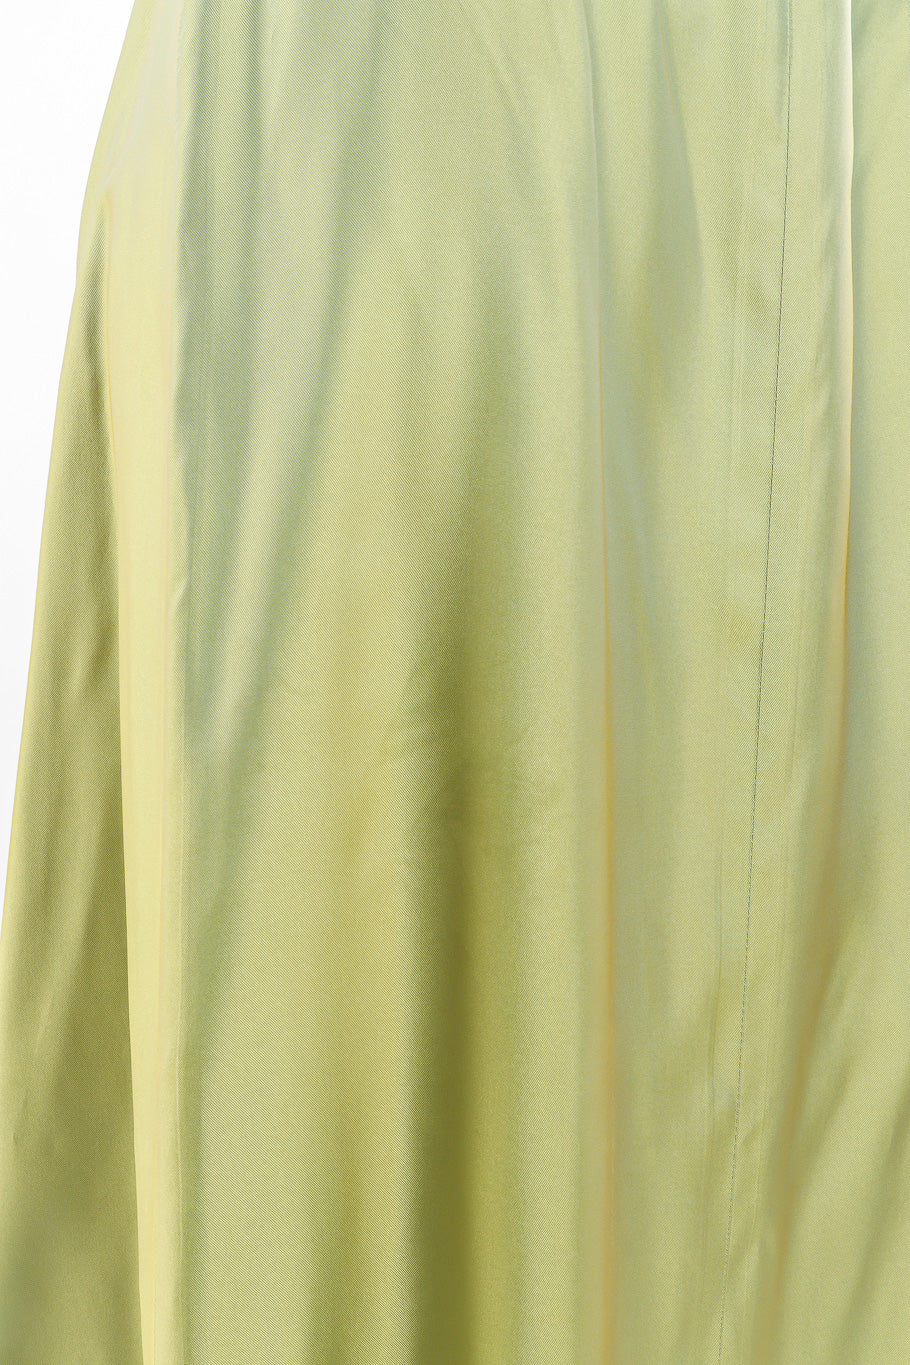 Iridescent maxi skirt by Chanel fabric close @recessla